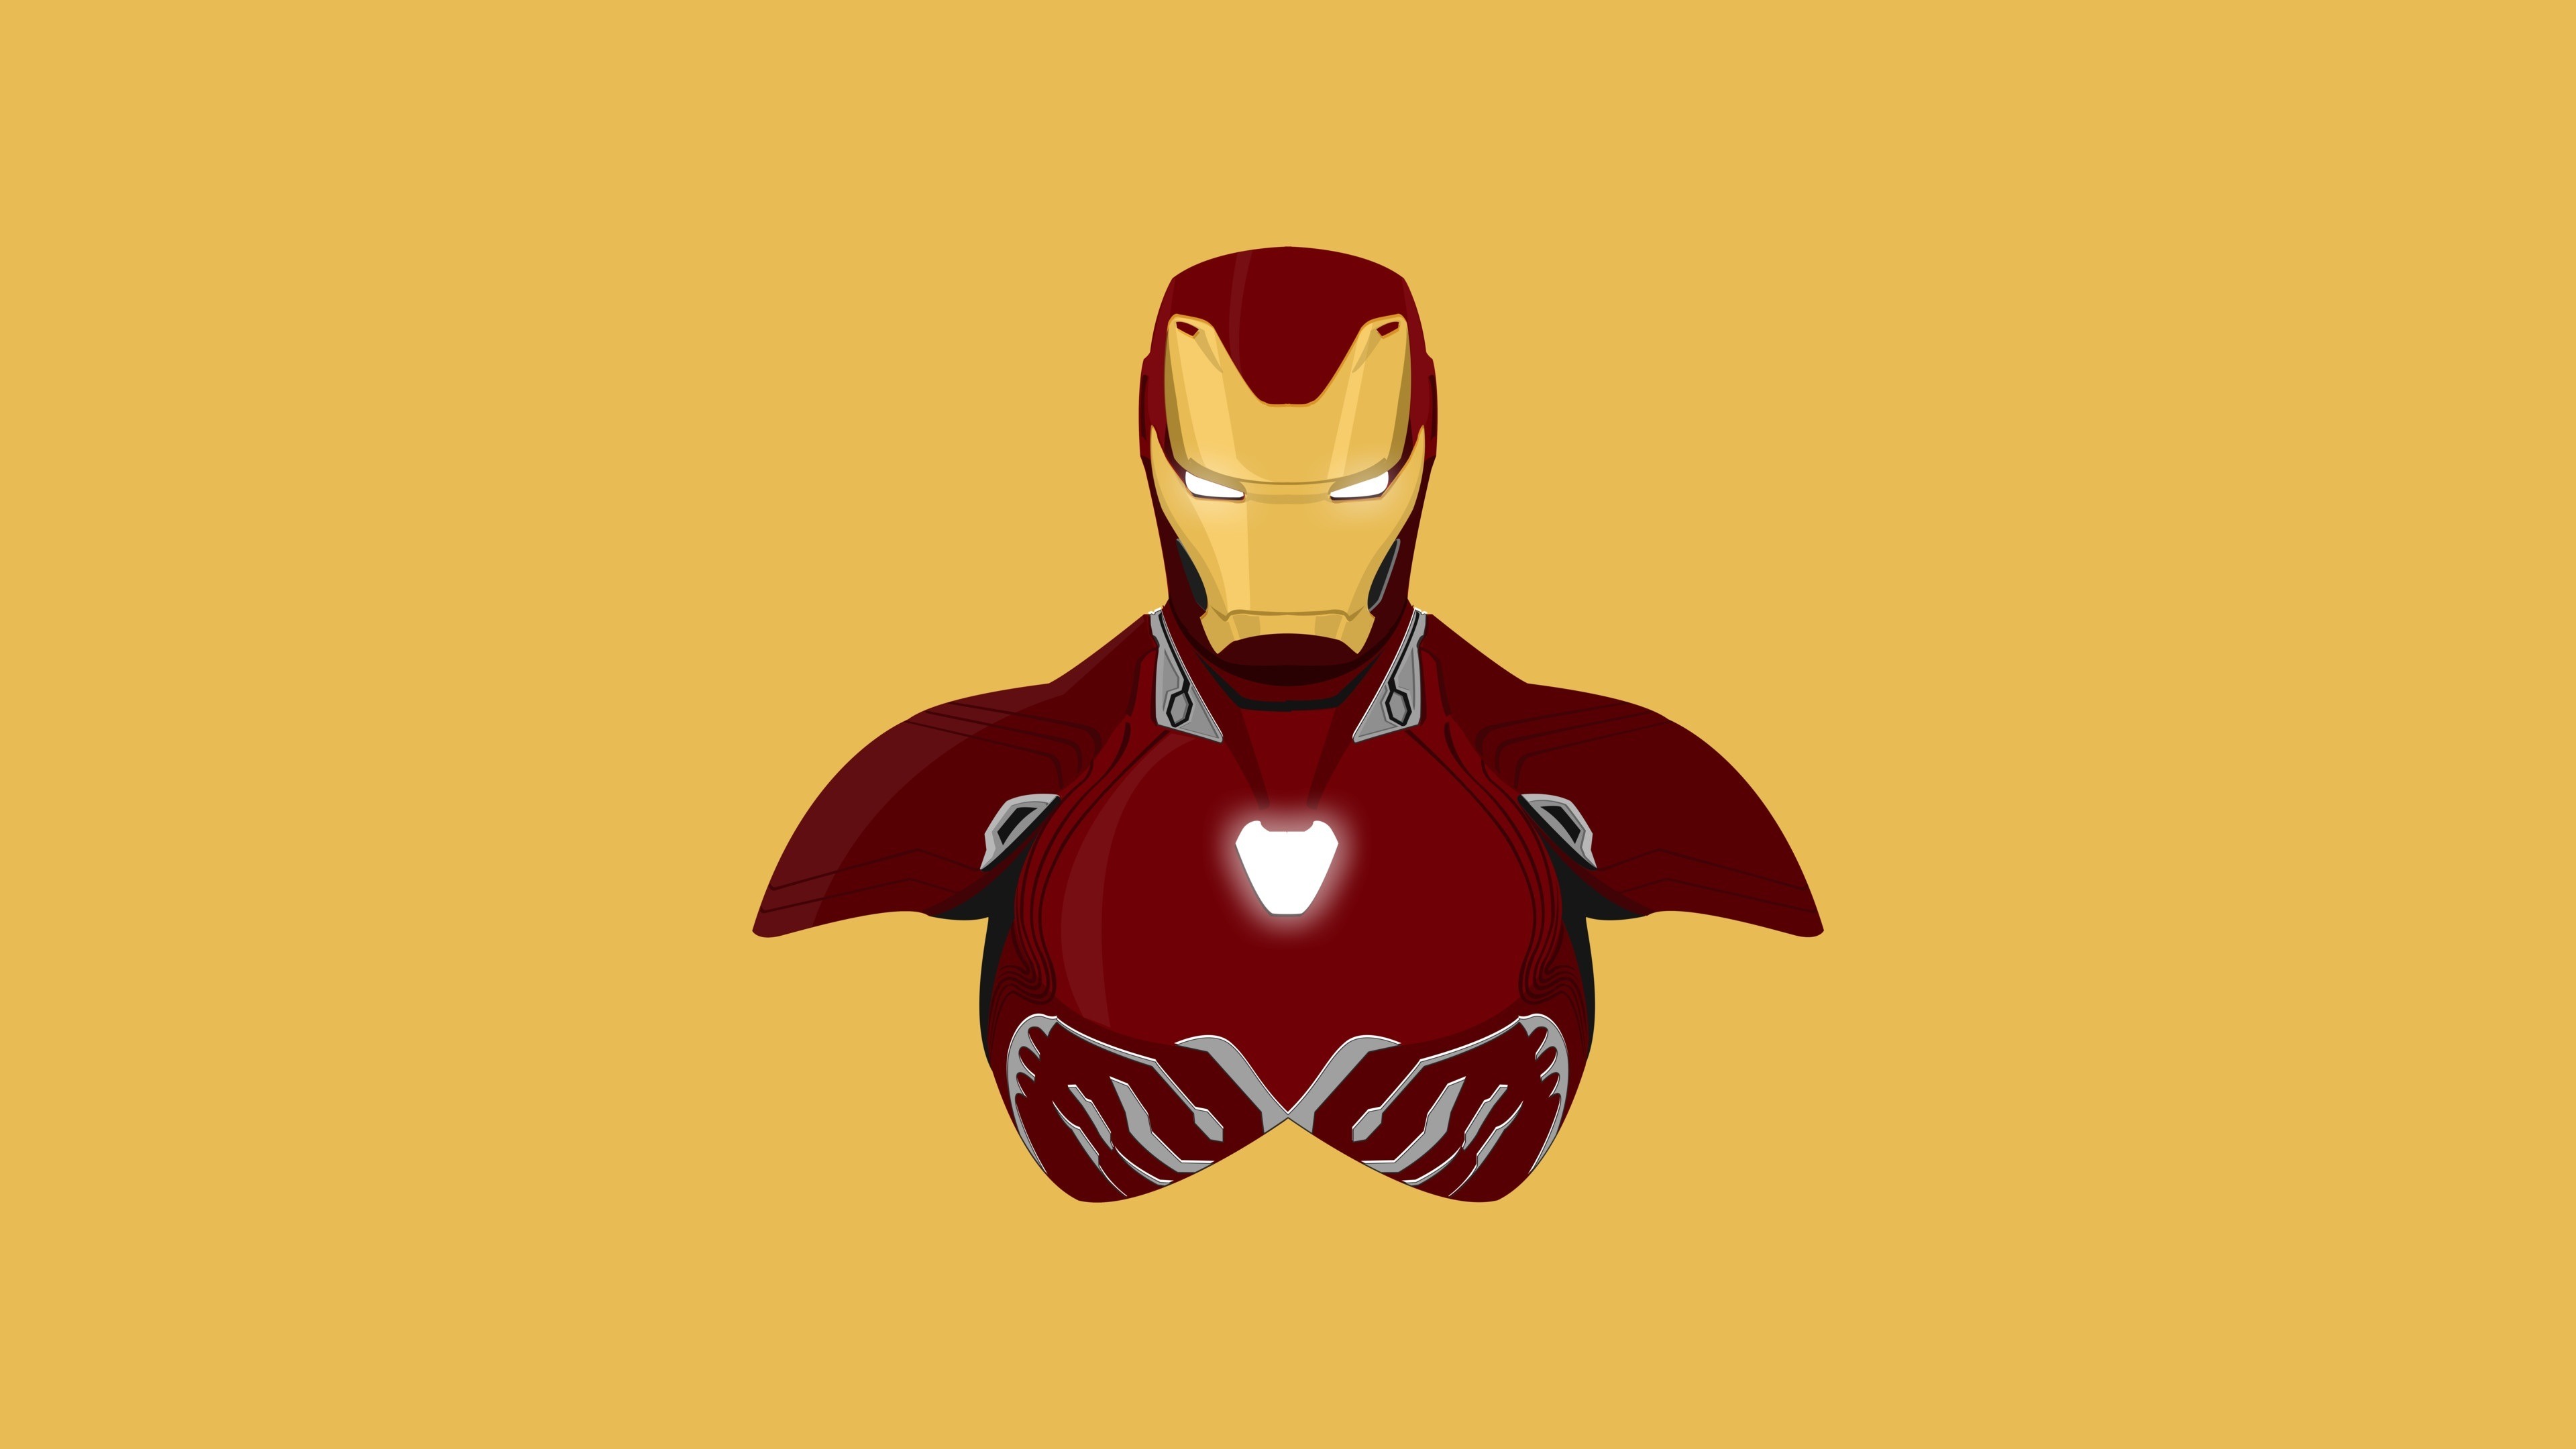 superhero wallpaper,superhero,fictional character,iron man,art,illustration